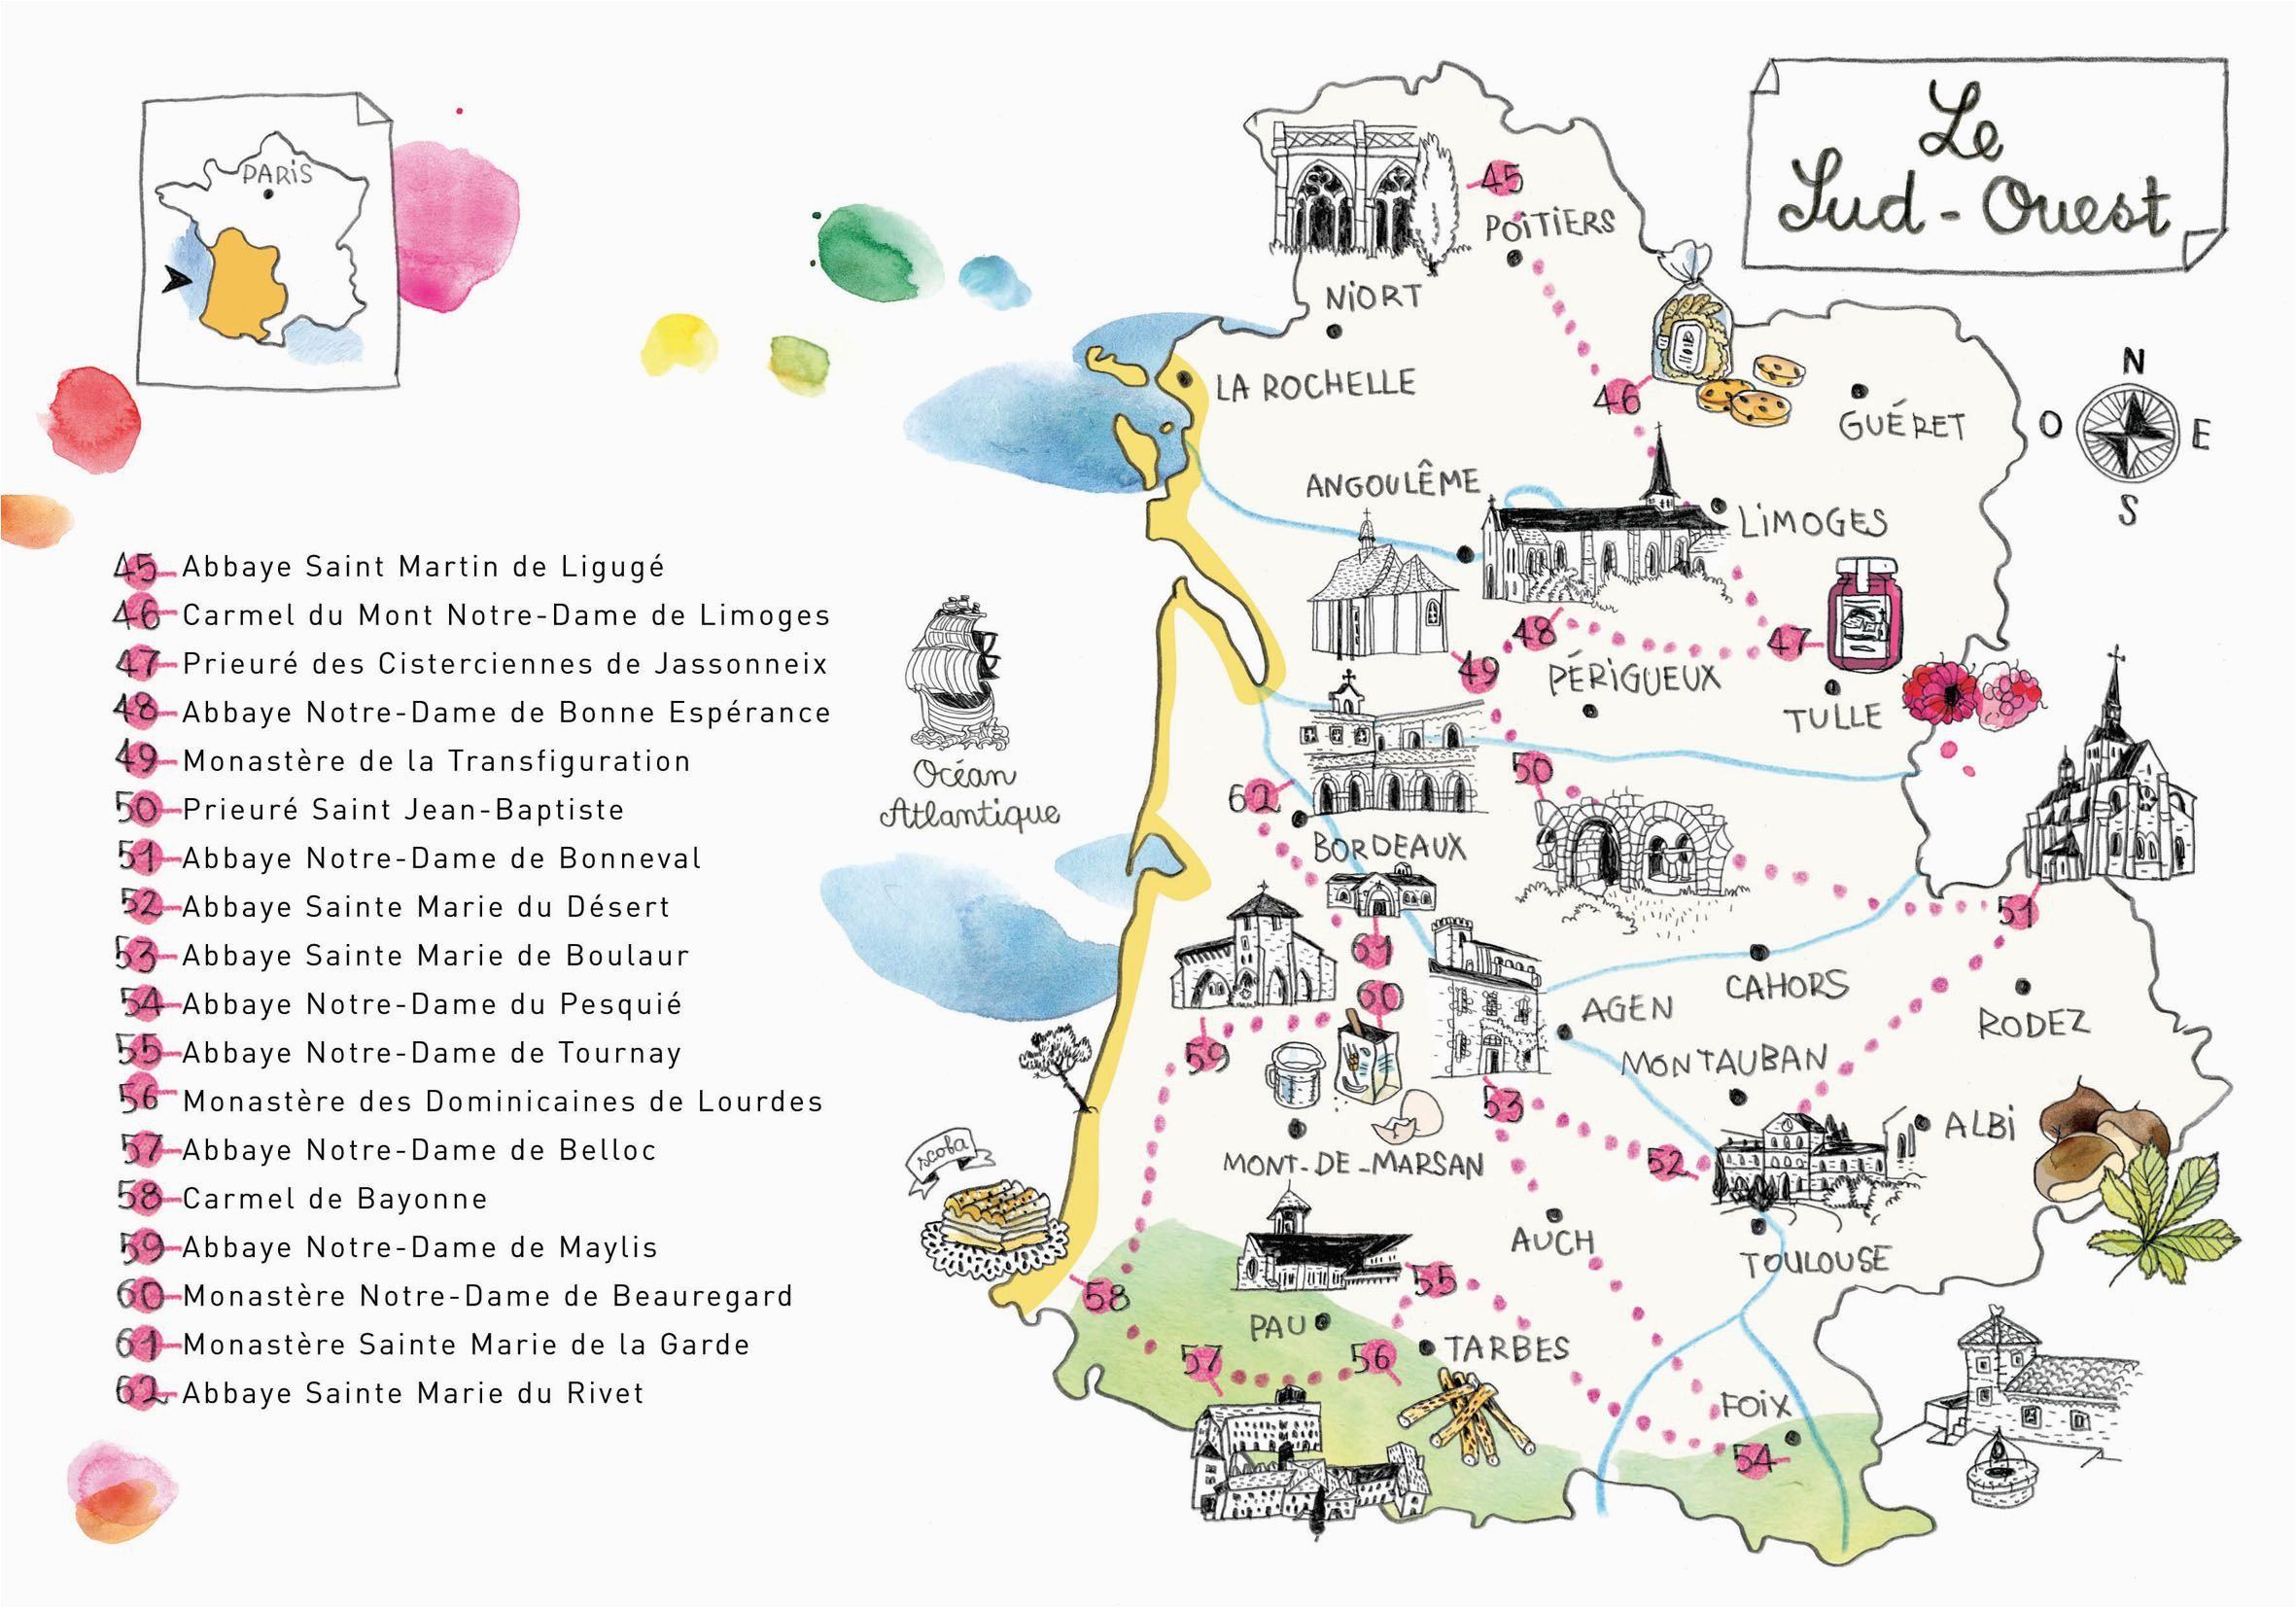 caroline donadieu guide des abbayes south west france map map